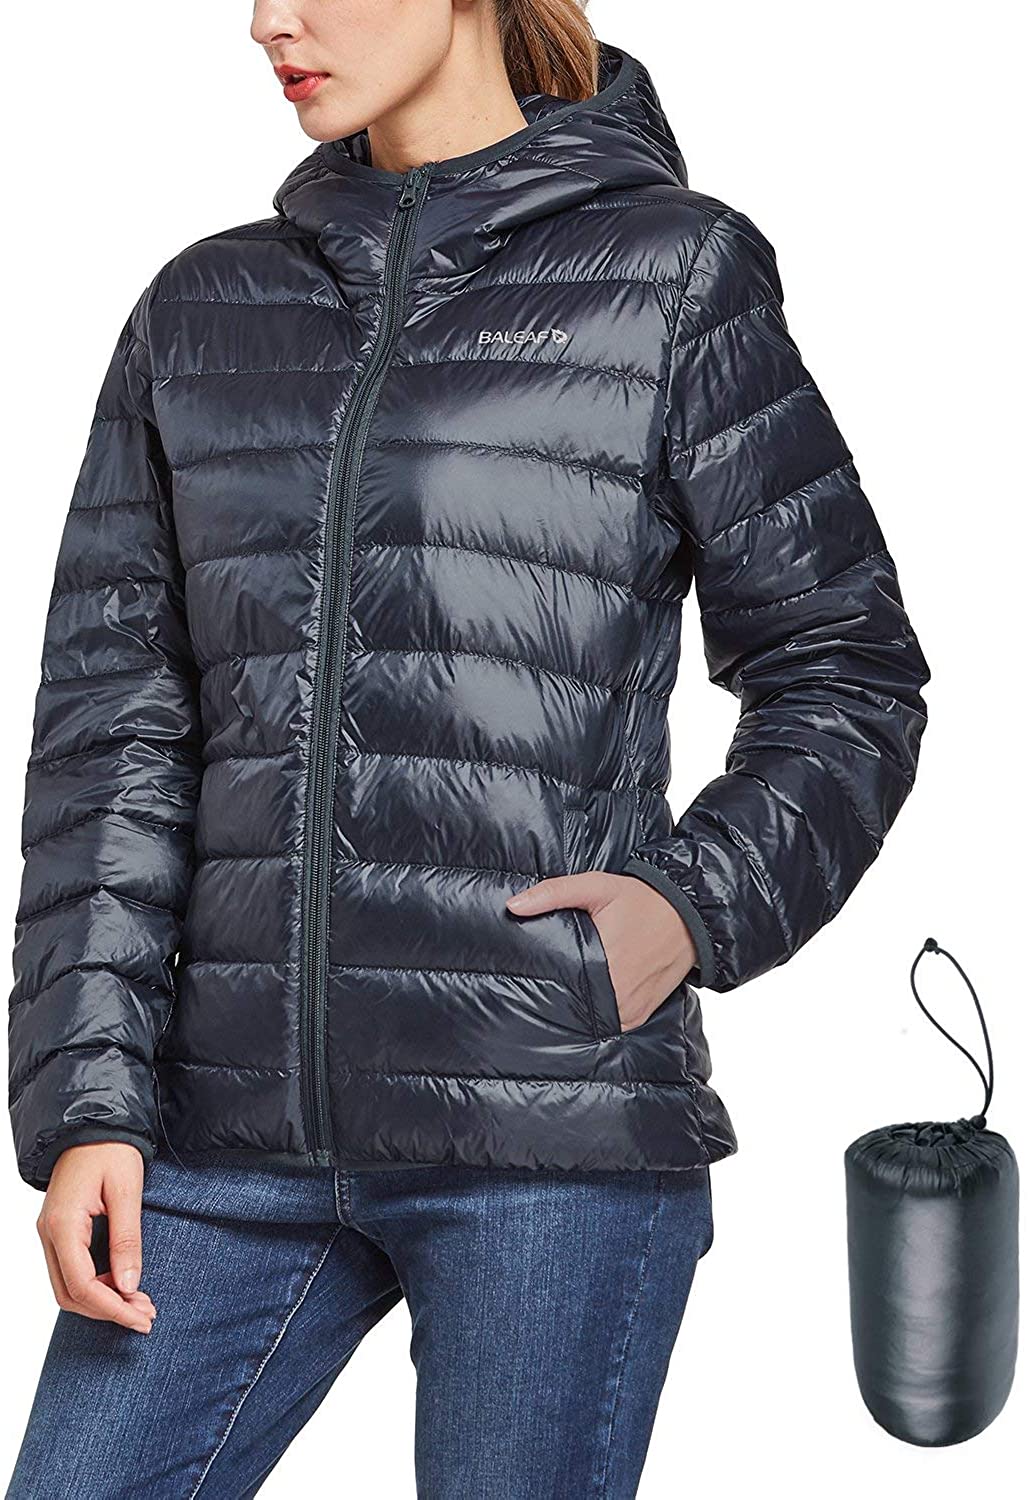 Baleaf Women S Packable Down Jacket Hooded Thermal Ultral Lightweight Puffer Jac Ebay